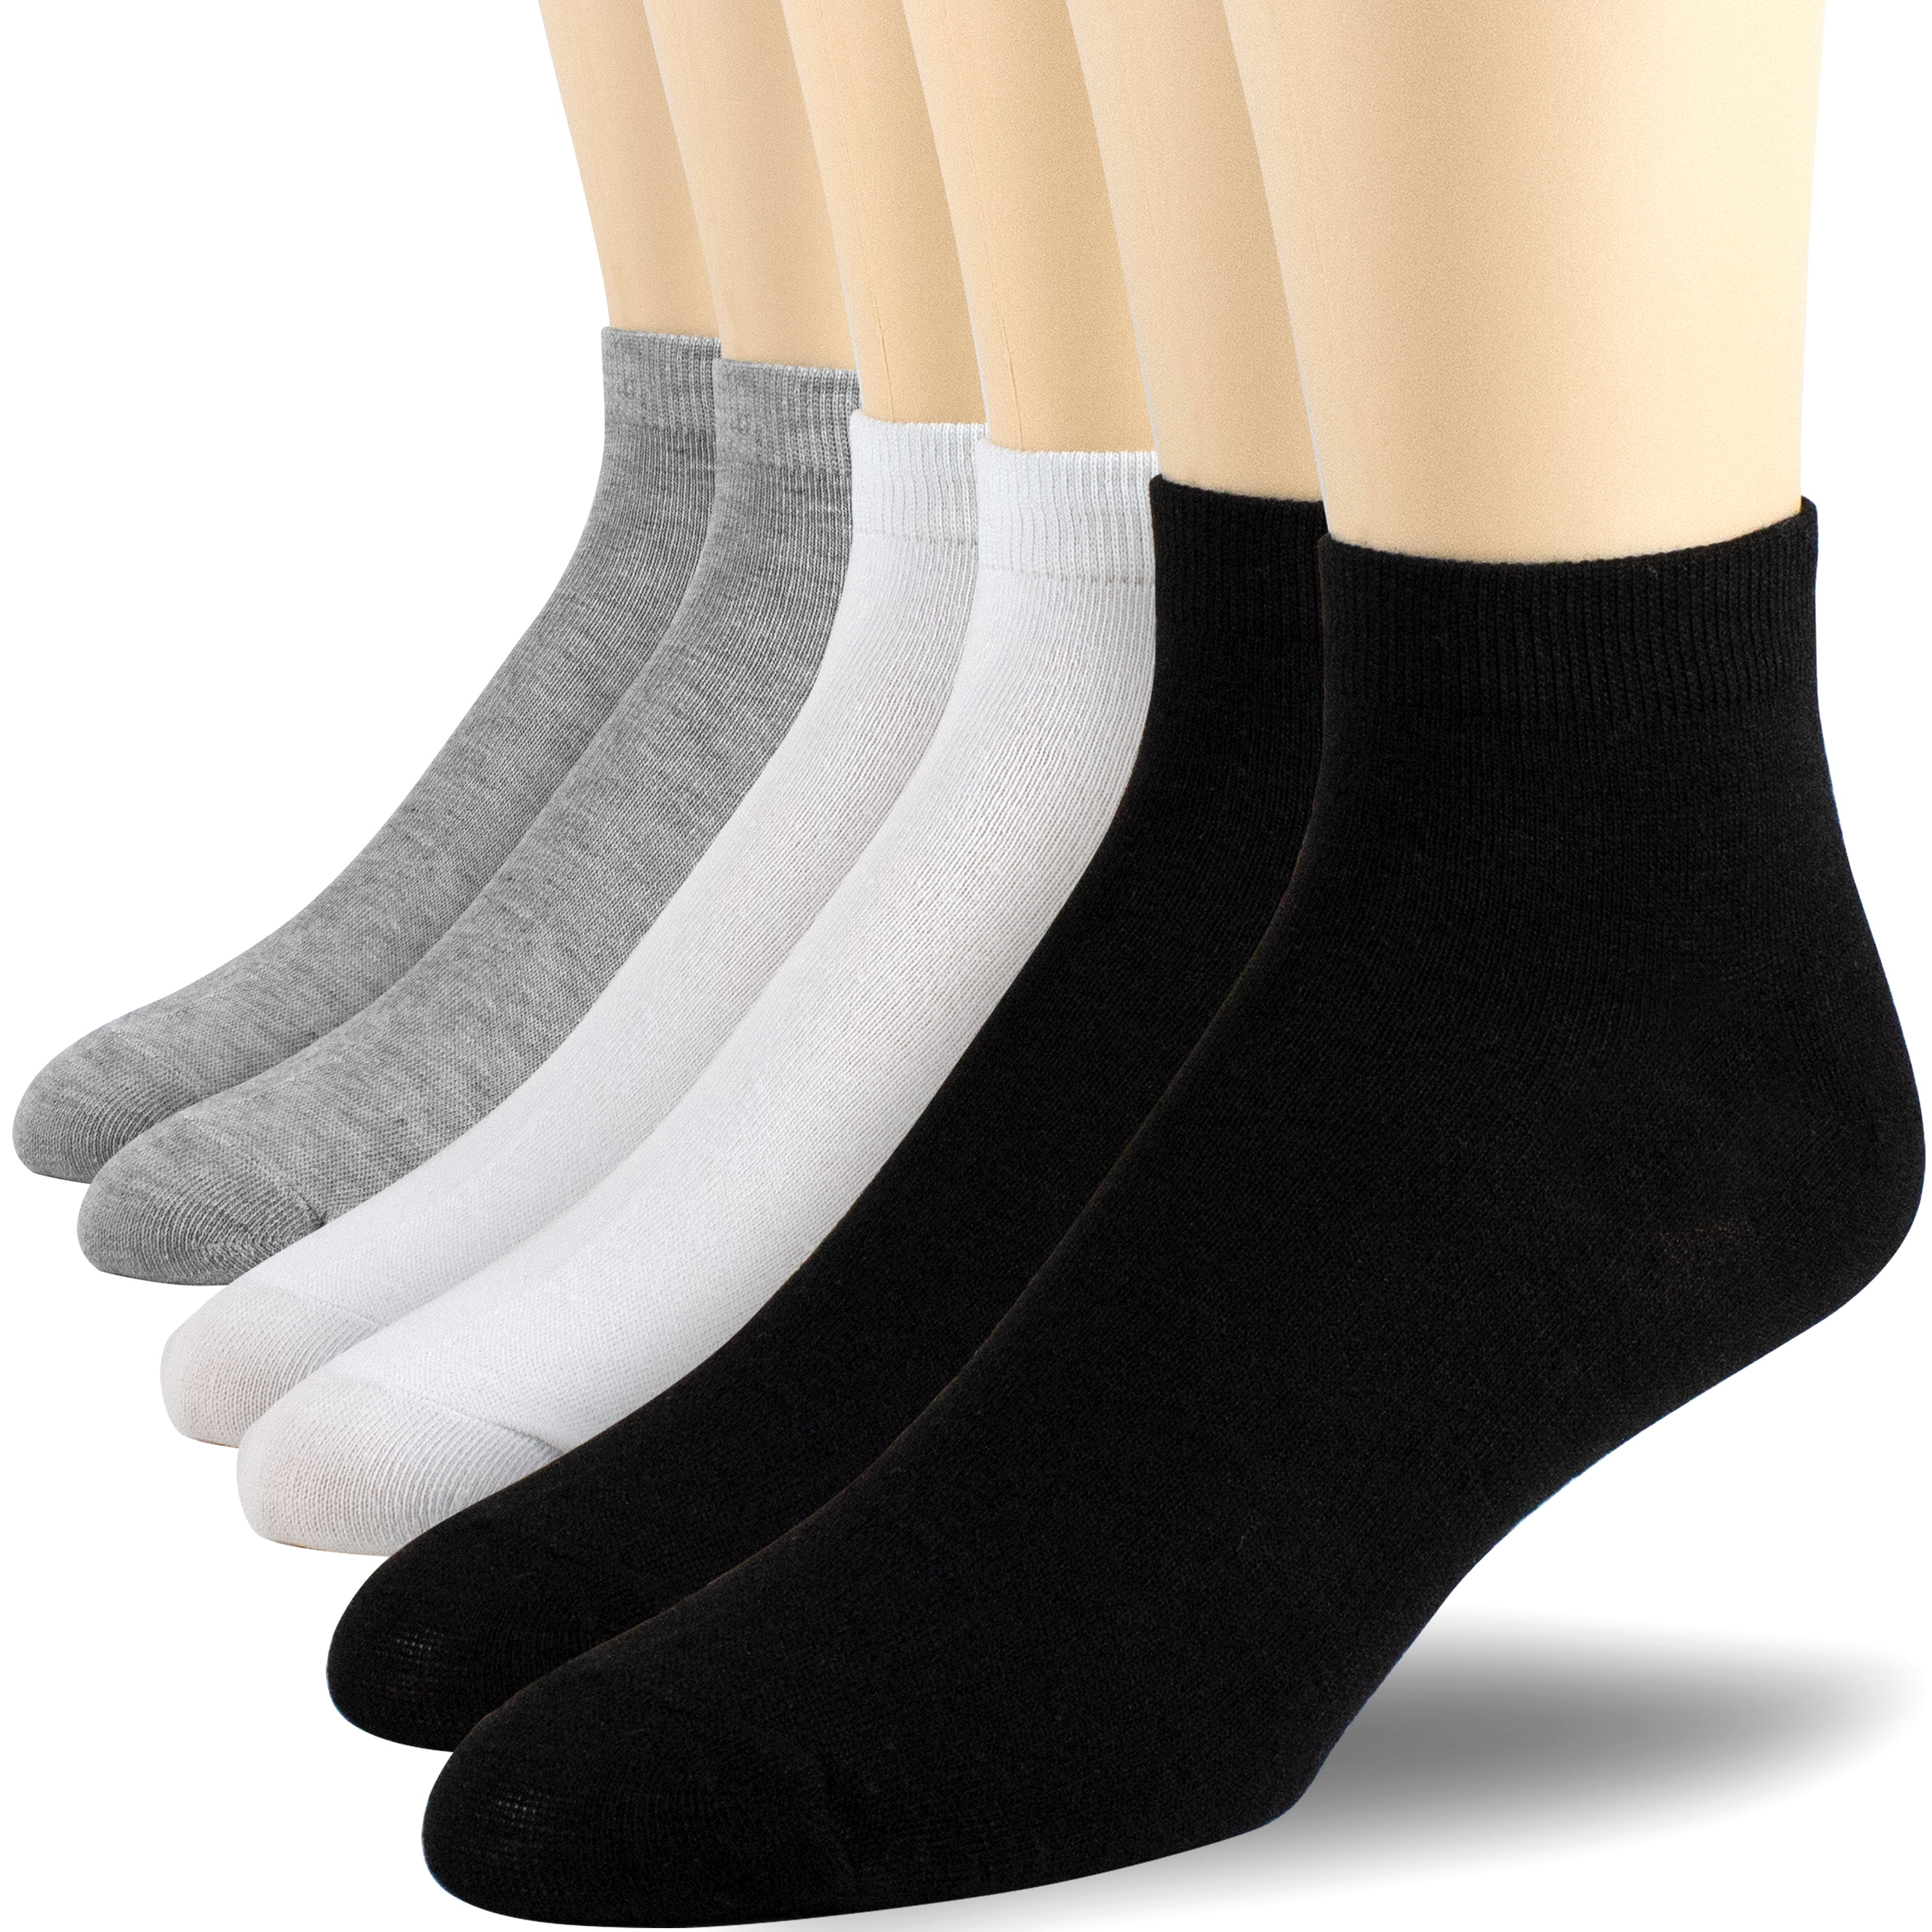 12 Pairs Ankle Quarter Crew Mens Sport Socks White 2 Tone Cotton Size 9-11 10-13 